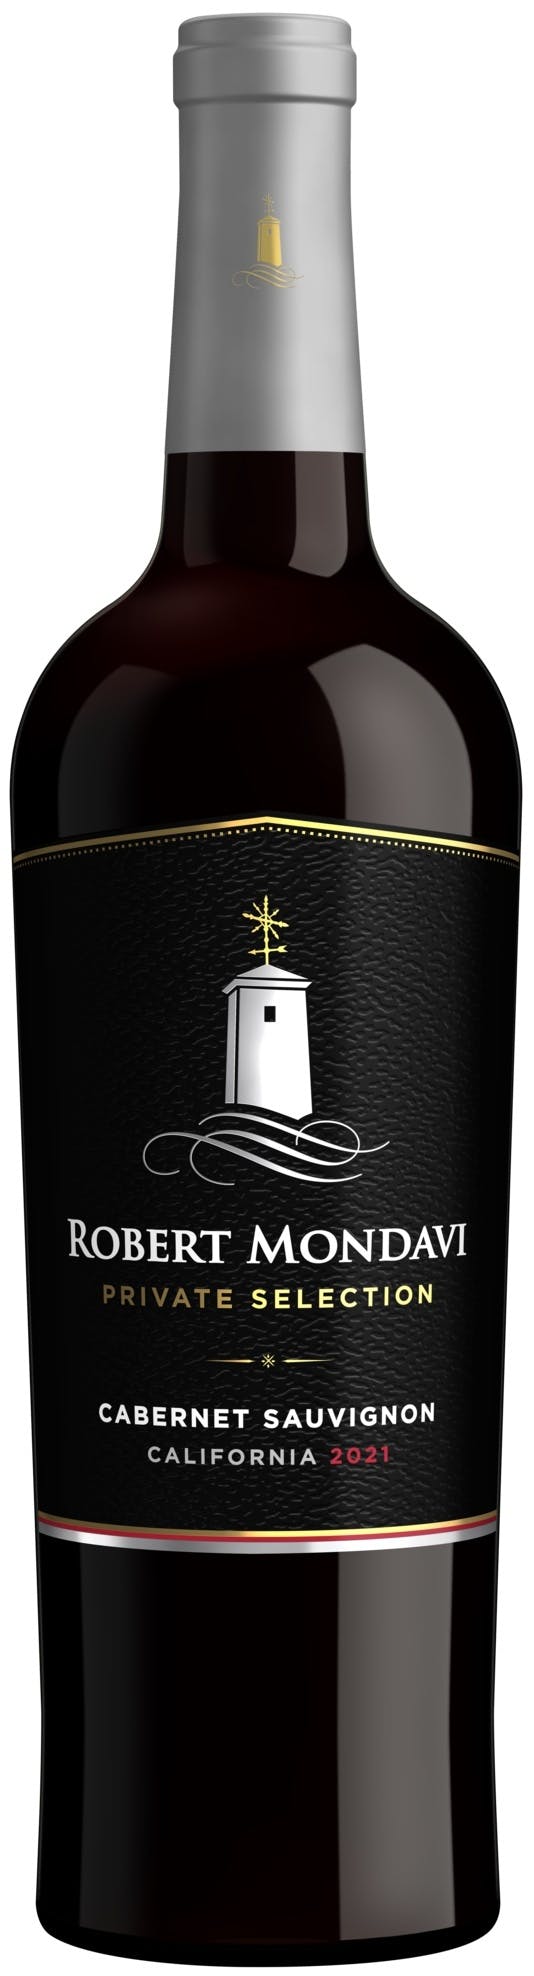 Robert Mondavi Private Selection Cabernet Sauvignon 2021 750ml